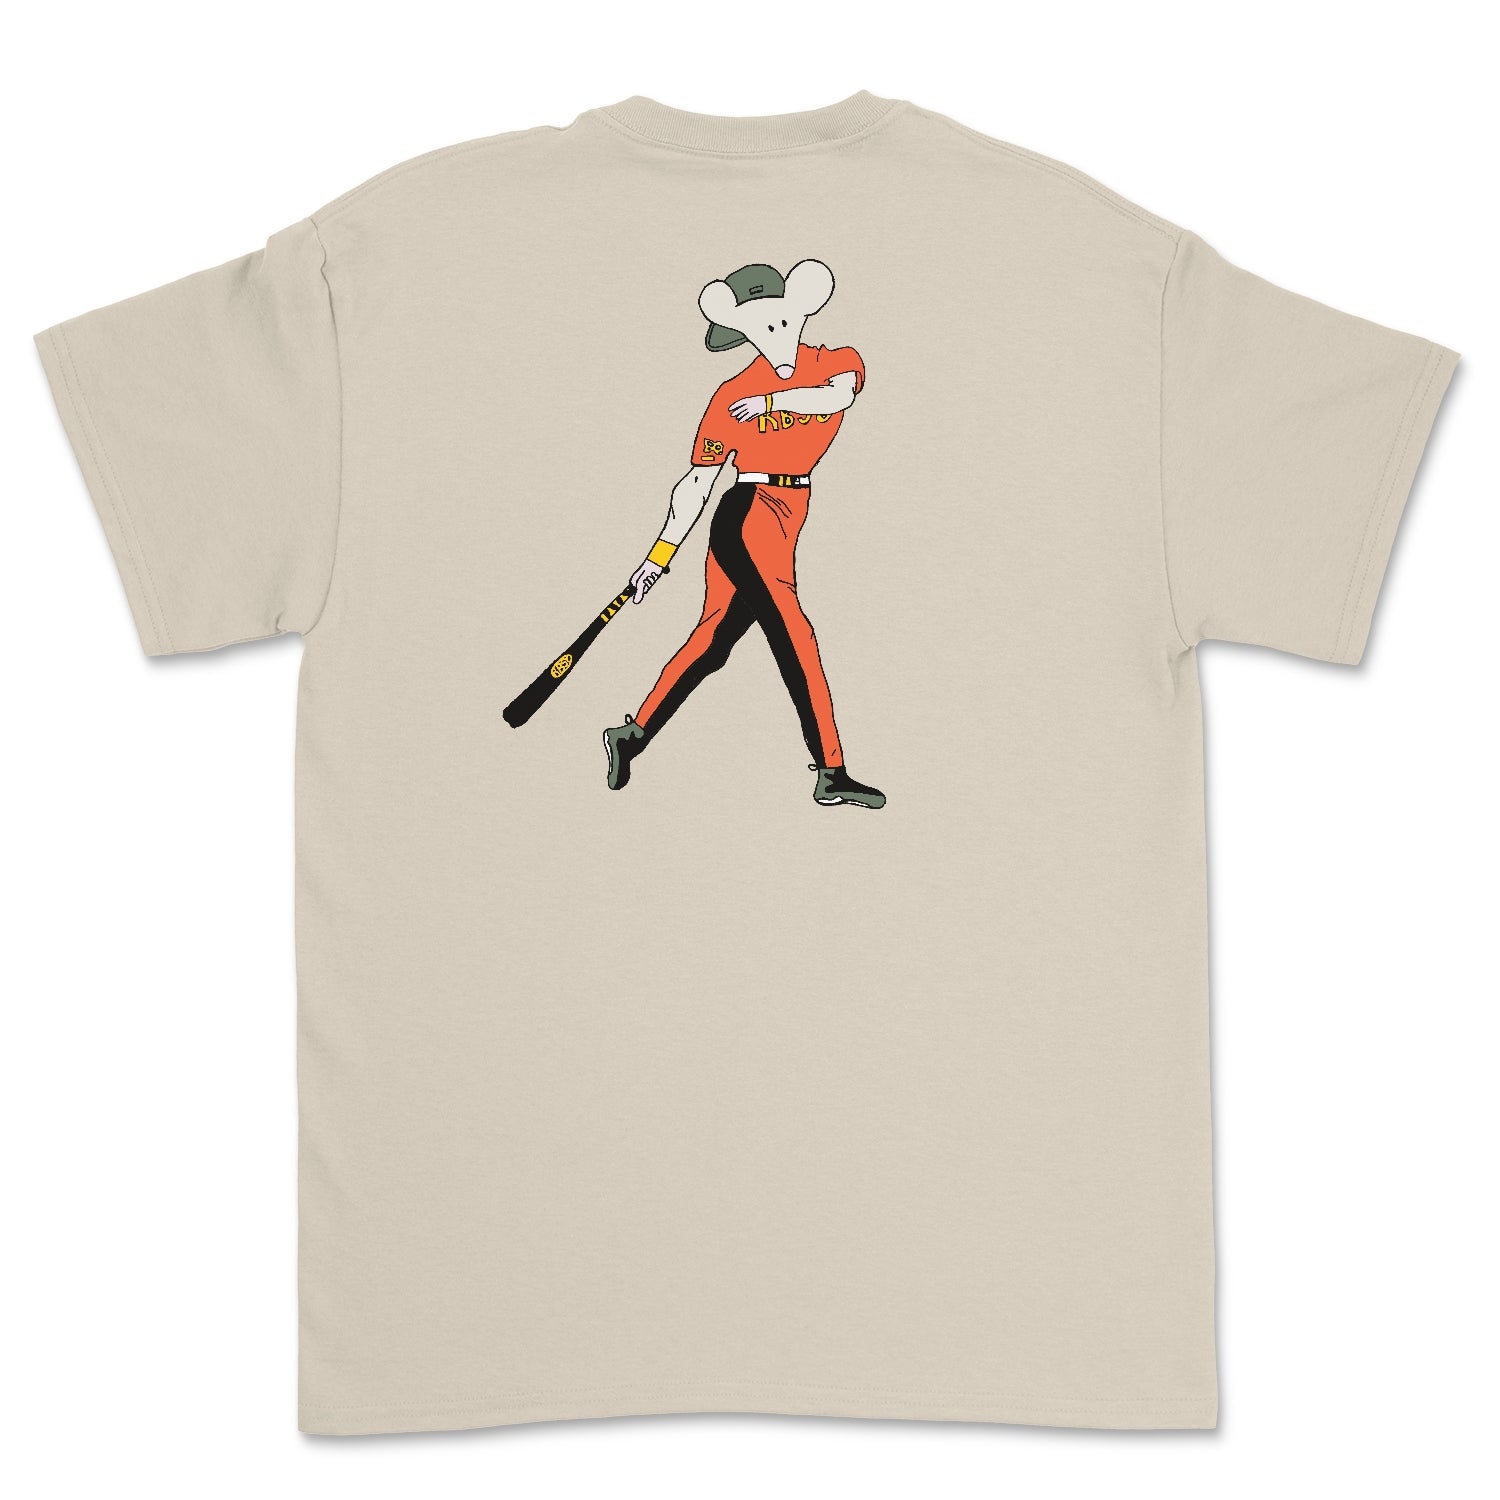 The Kid Graphic Tee Shirt